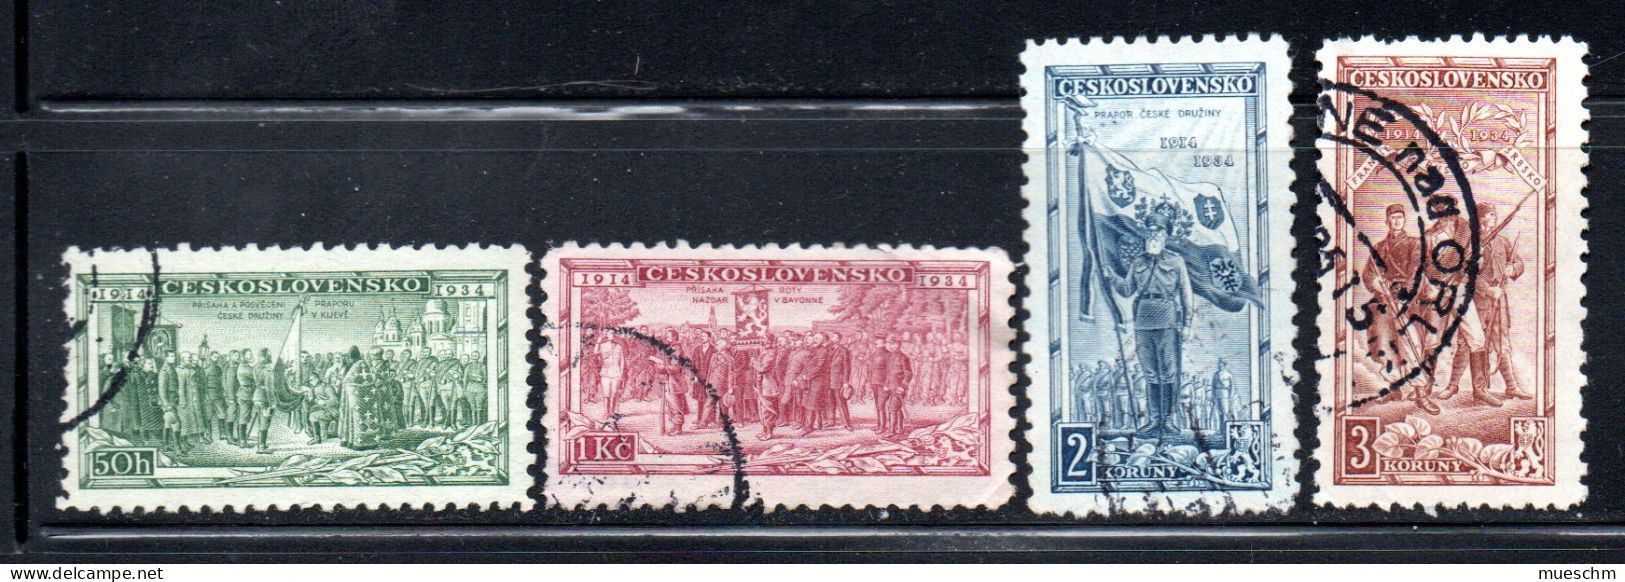 Tschechoslowakei,  1929, Freimarkensatz "Landschaften", 3-10Kcs., MiNr.291-294, Gestempelt (19529E) - Used Stamps